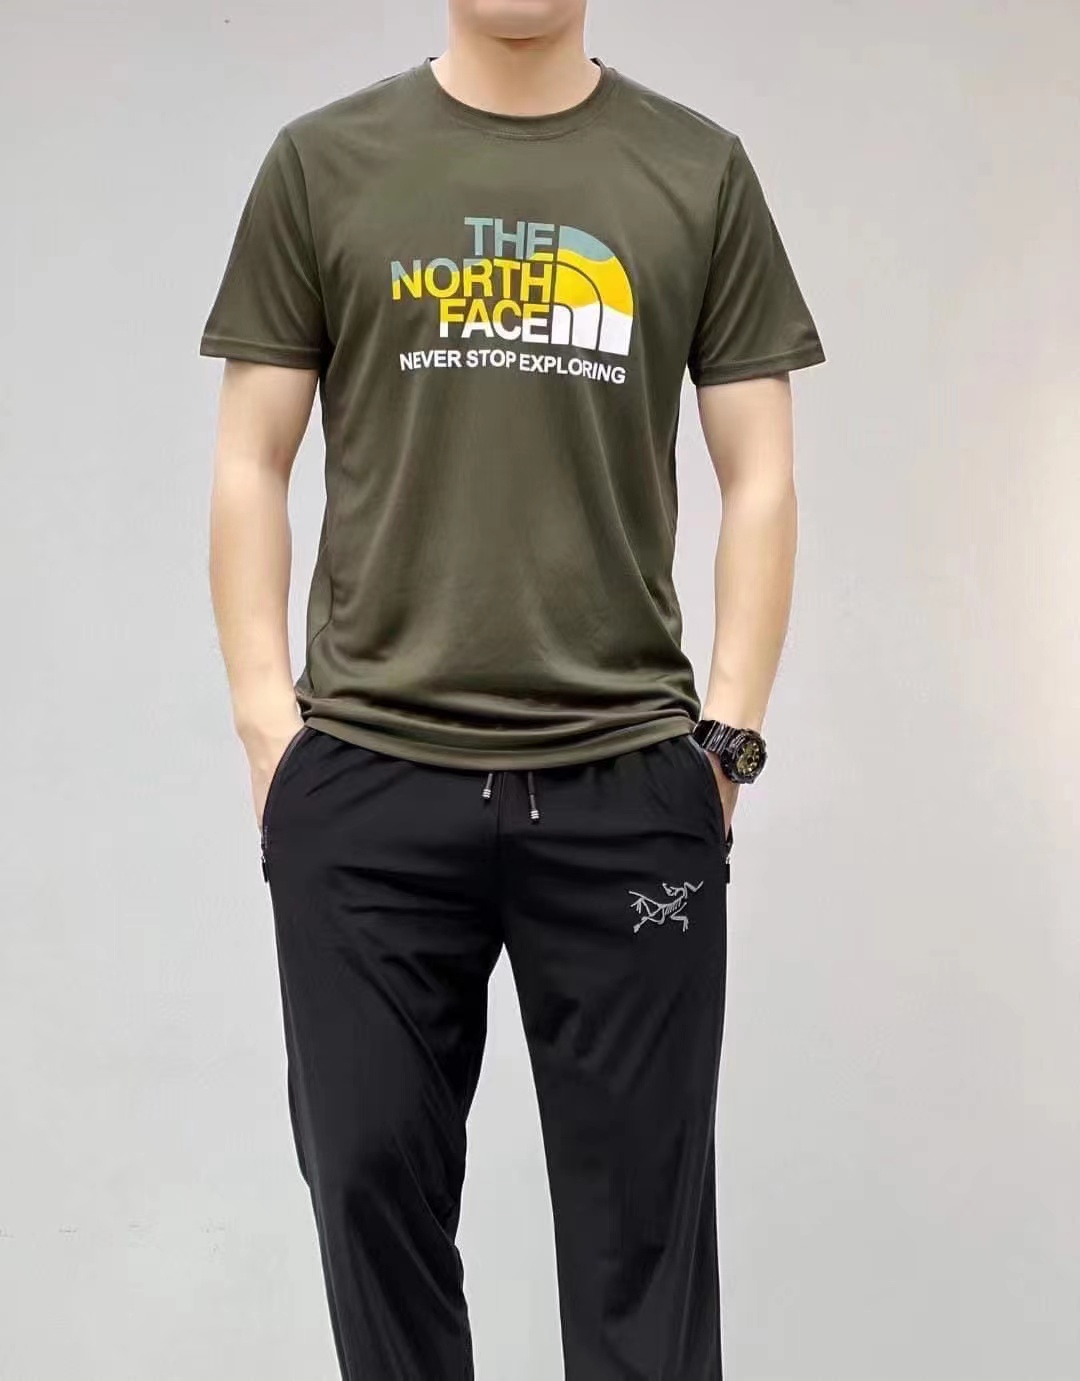 The North Face Summer Cotton 100 Percent Unisex Fashion T-shirt